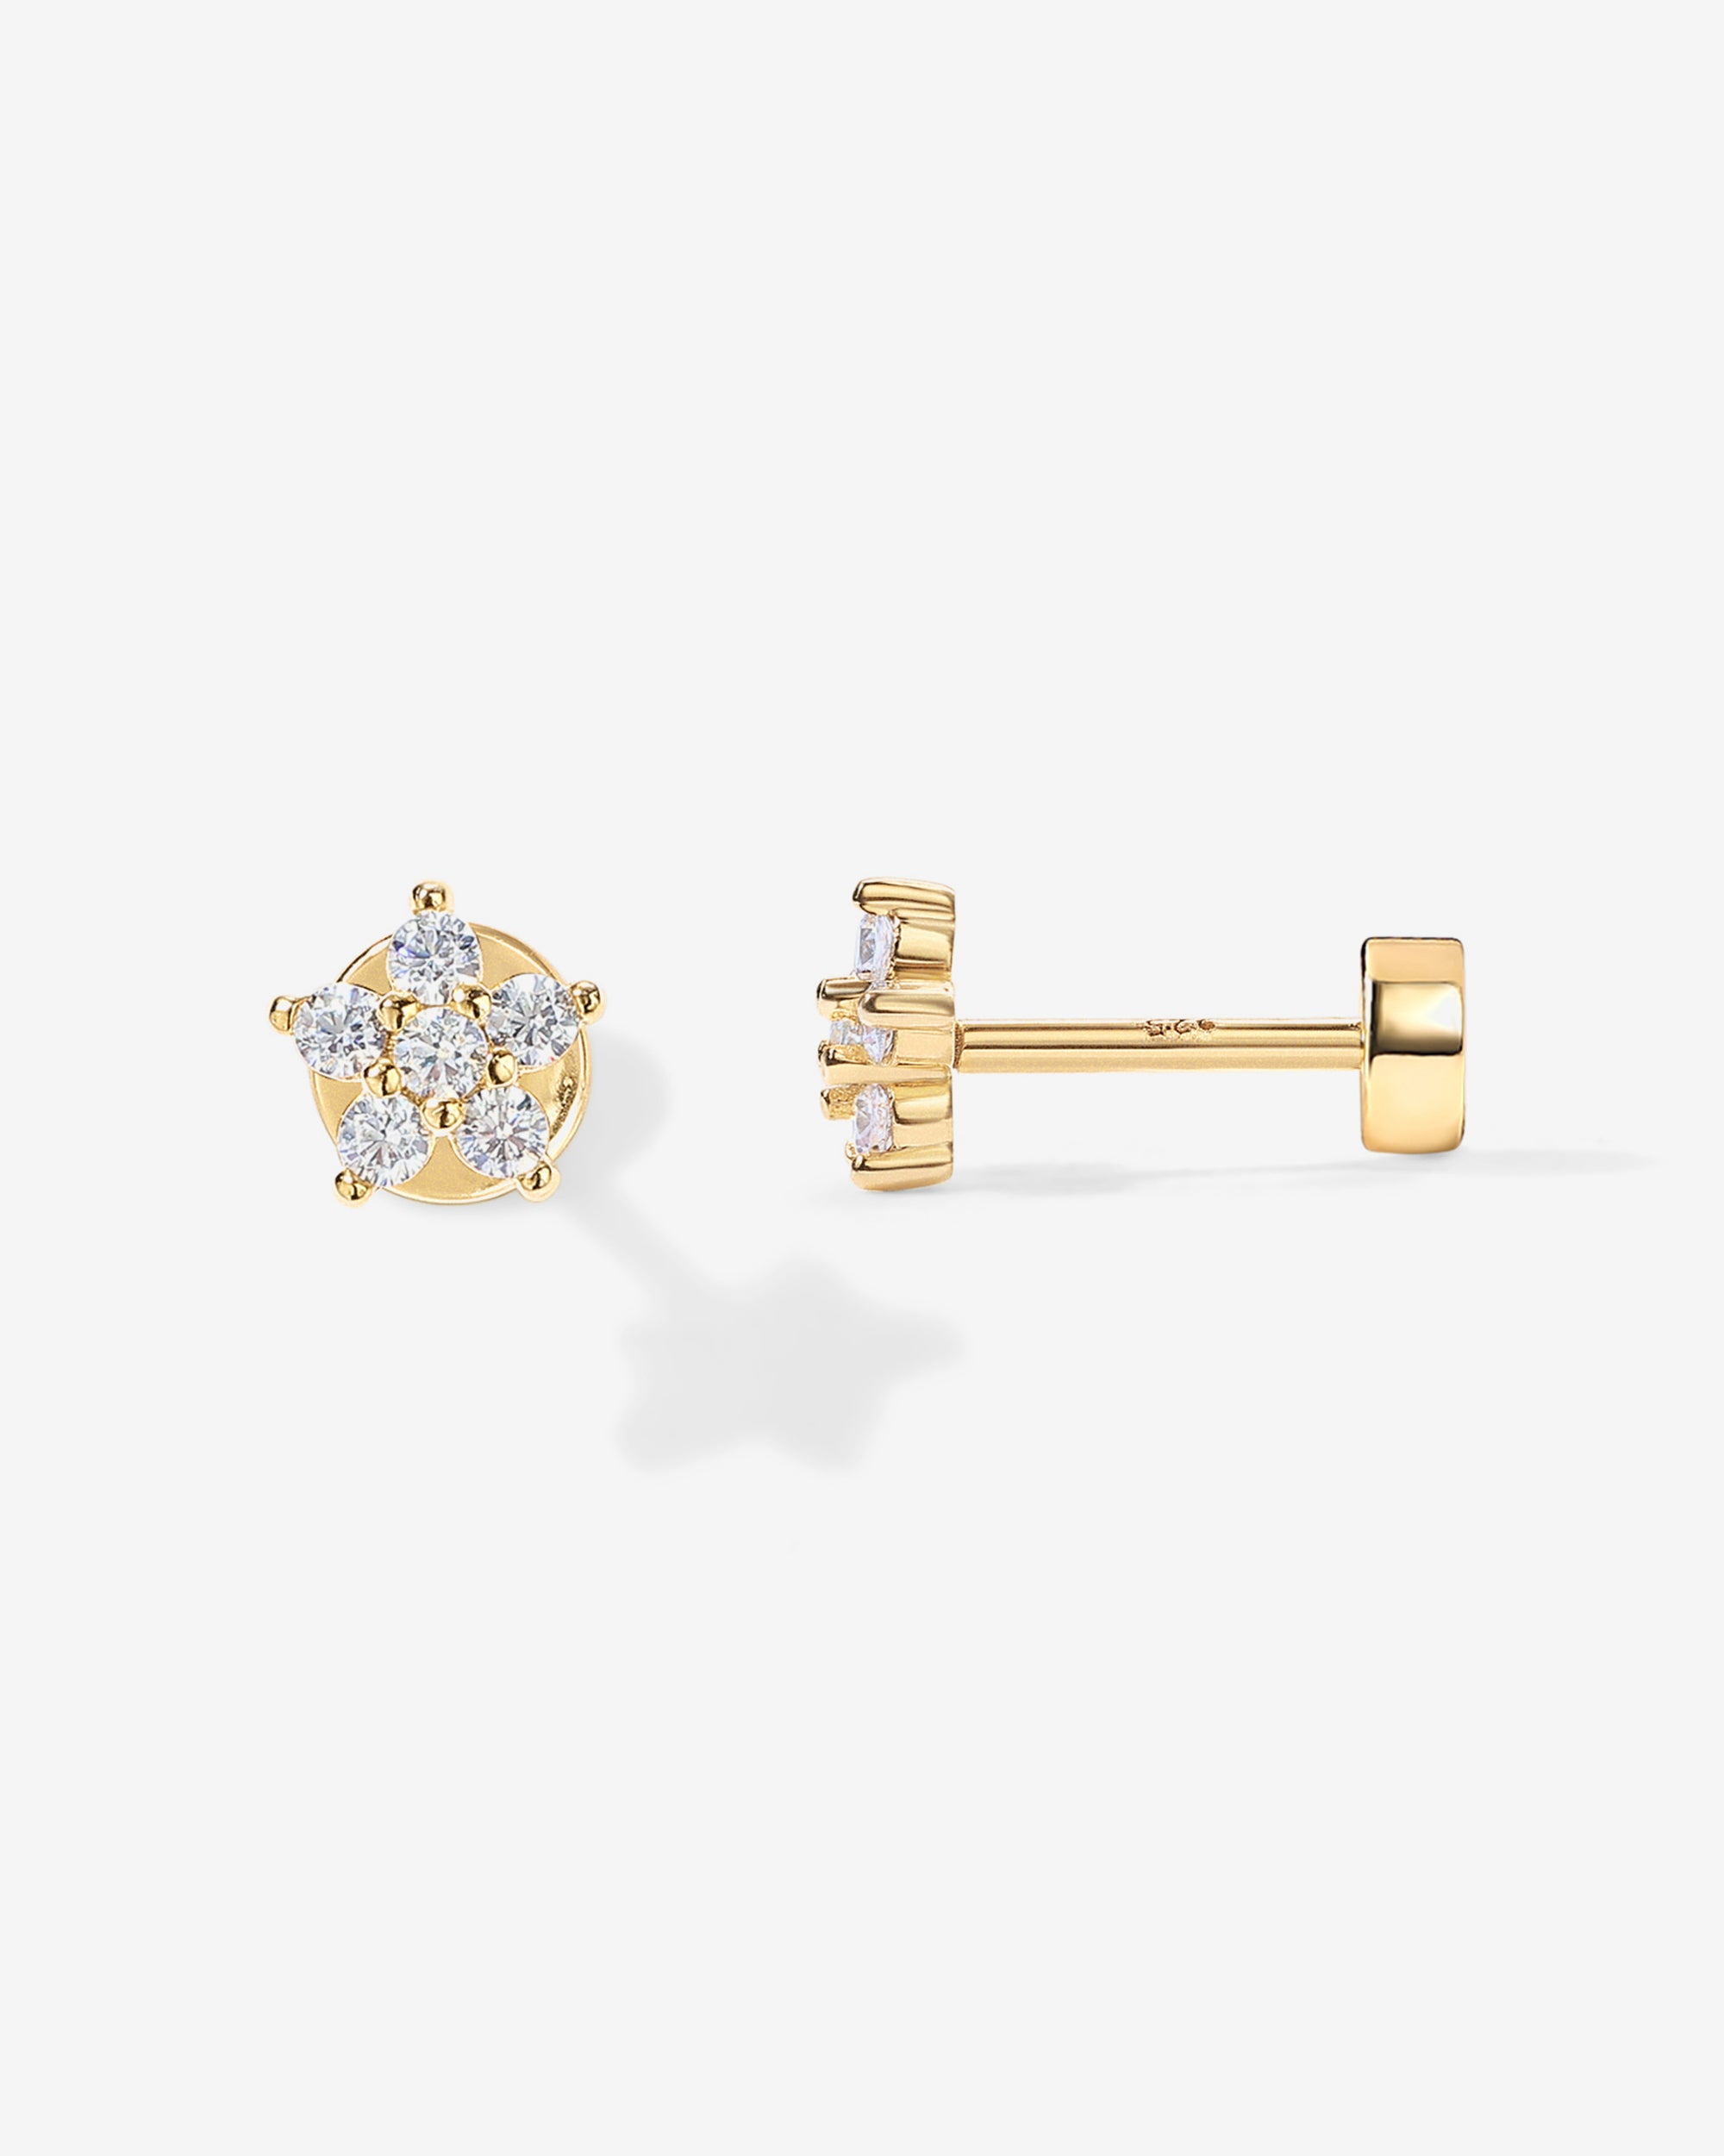 14k White Gold Pearl & Diamond Vintage Screw Back Earrings by Everts  Jewelers | eBay